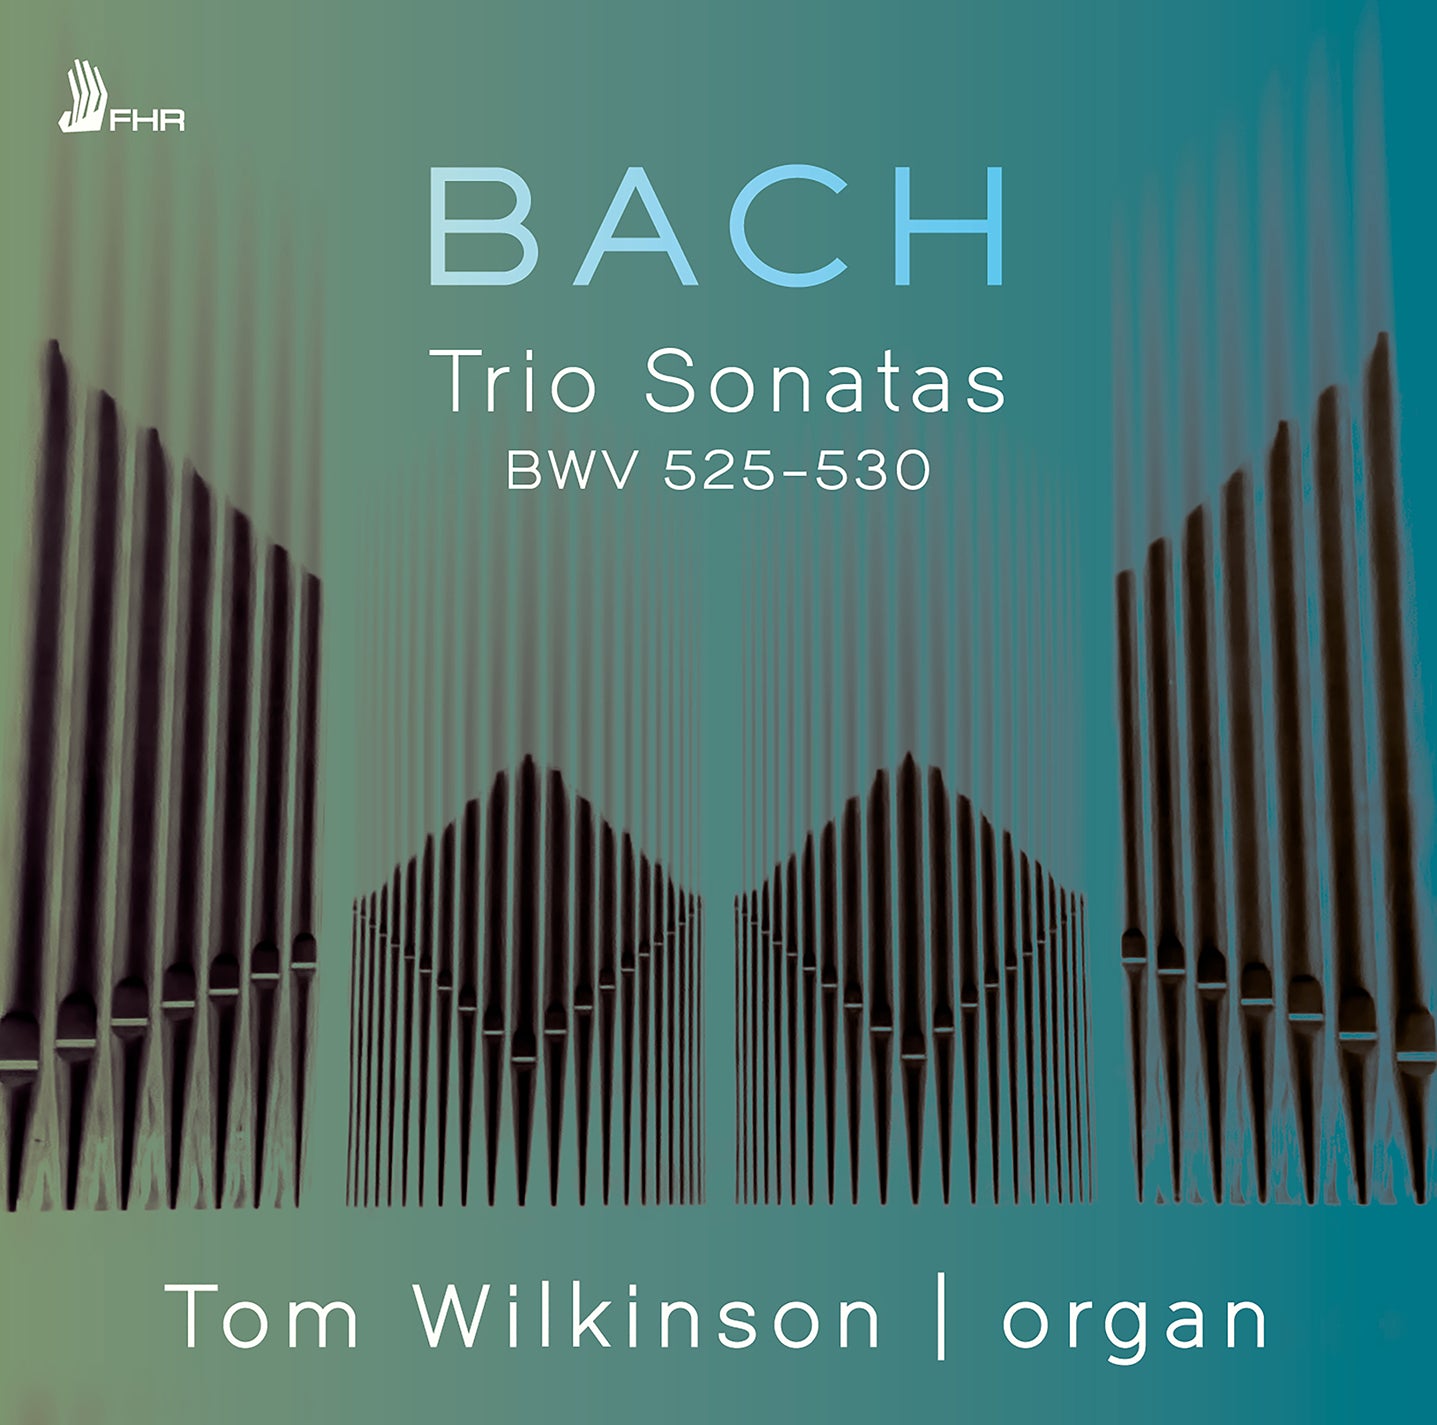 J.S. Bach: Trio Sonatas for Organ, BWV 525-530 / Wilkinson